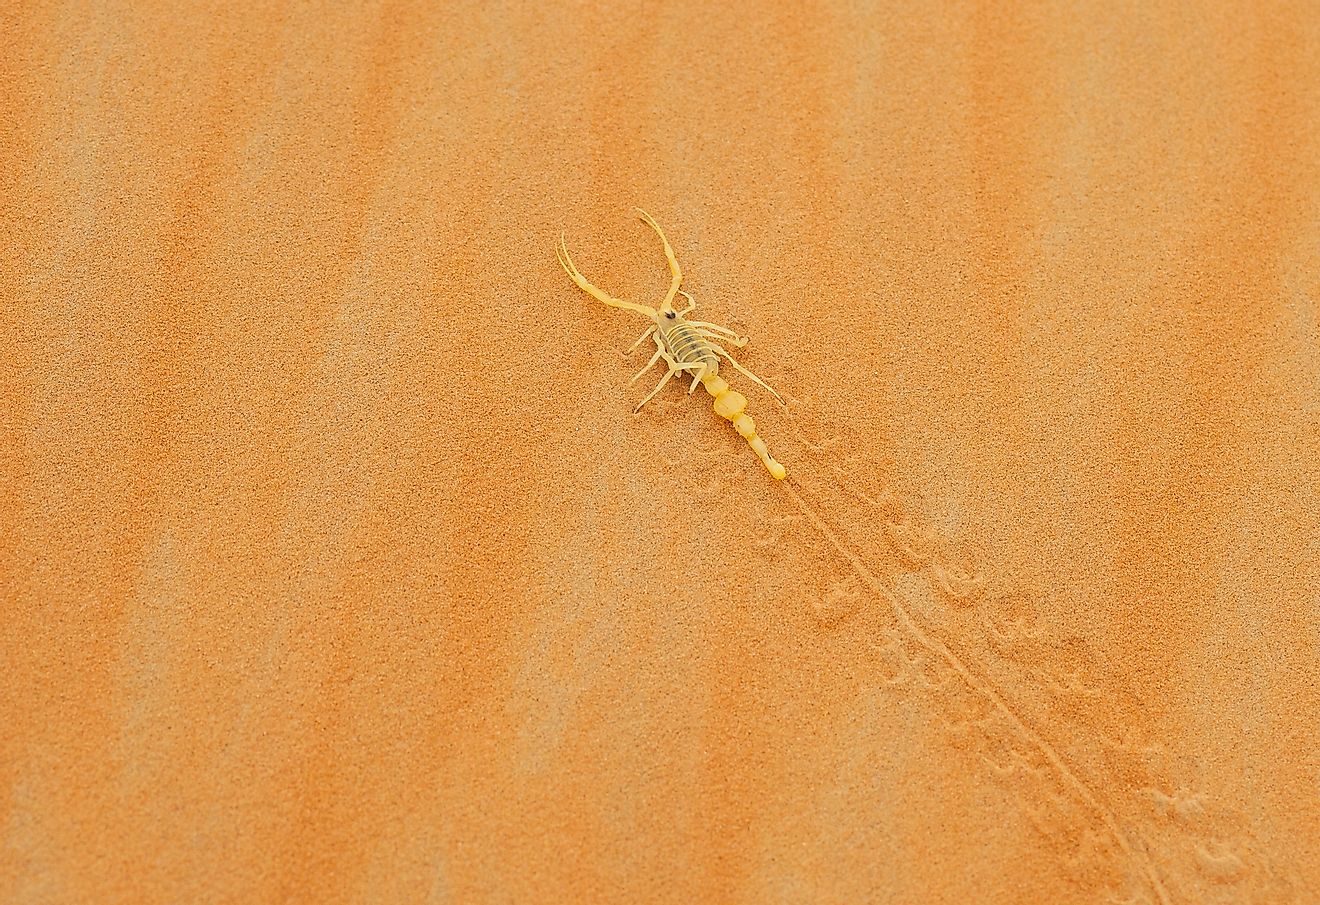 A highly venomous Arabian scorpion leaving its tracks on a sand dune in the Empty Quarter Desert. Image credit: David Steele.Shutterstock.com